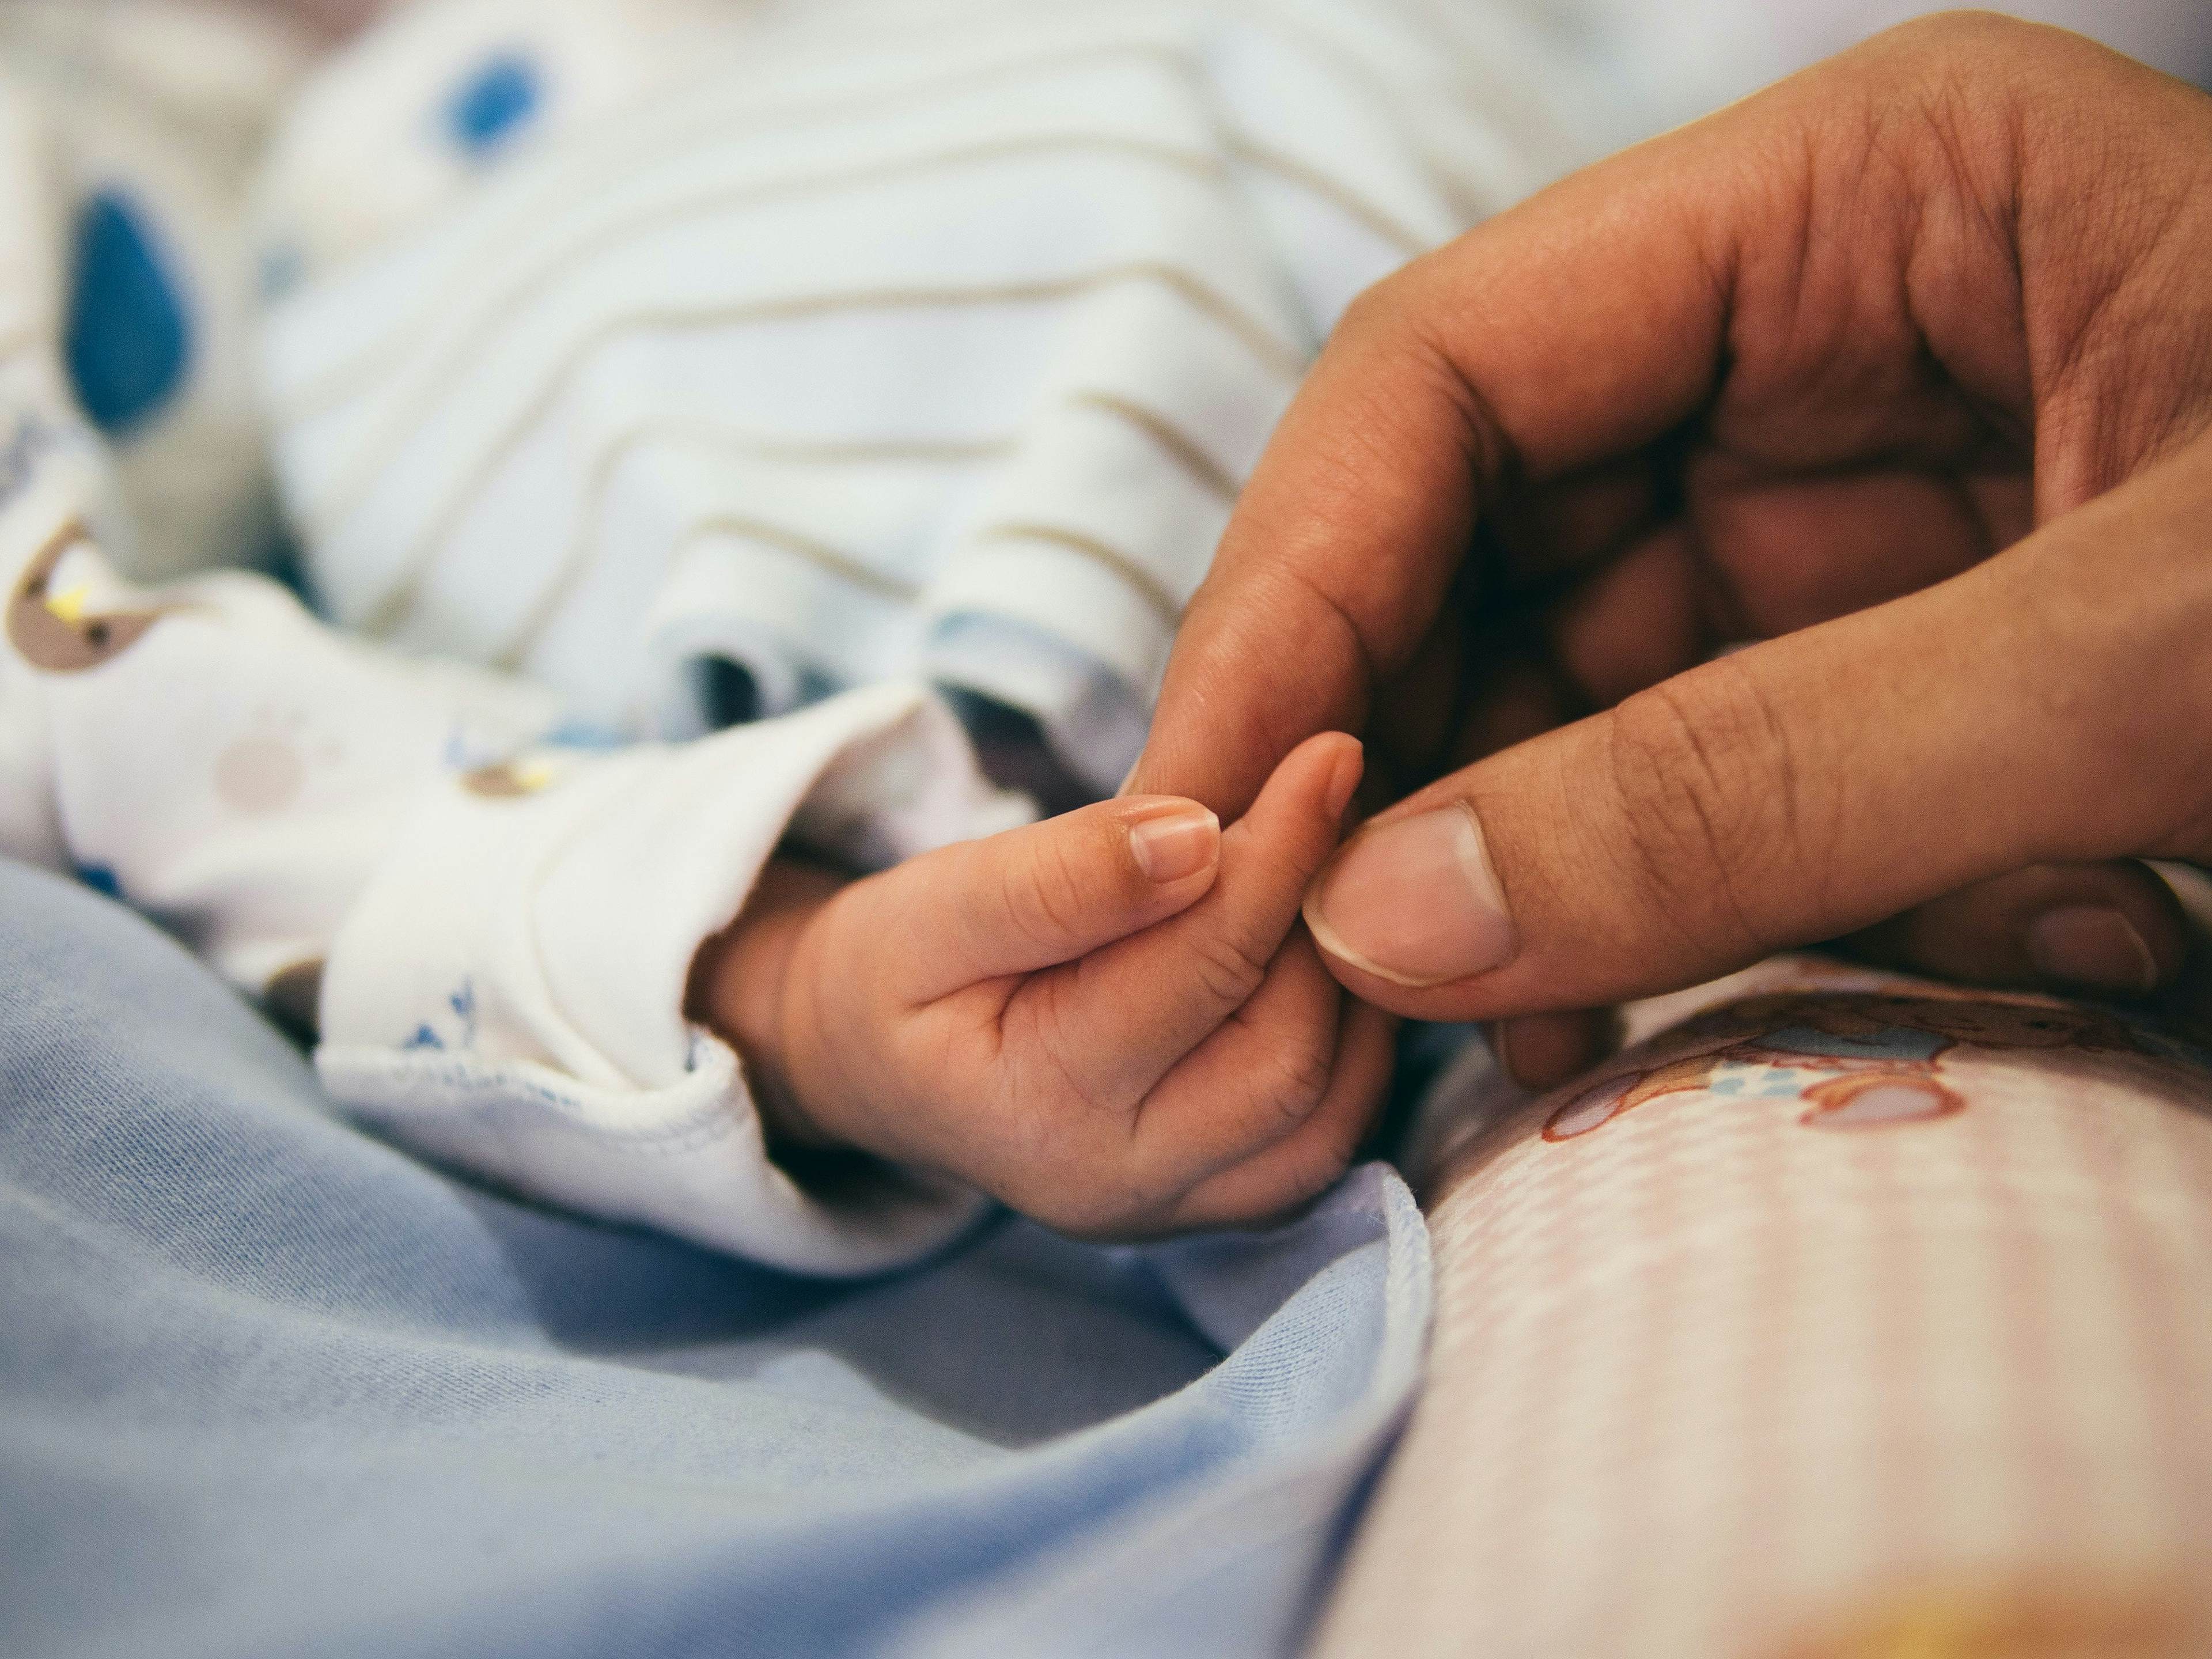 Newborn baby grasping finger of caregiver